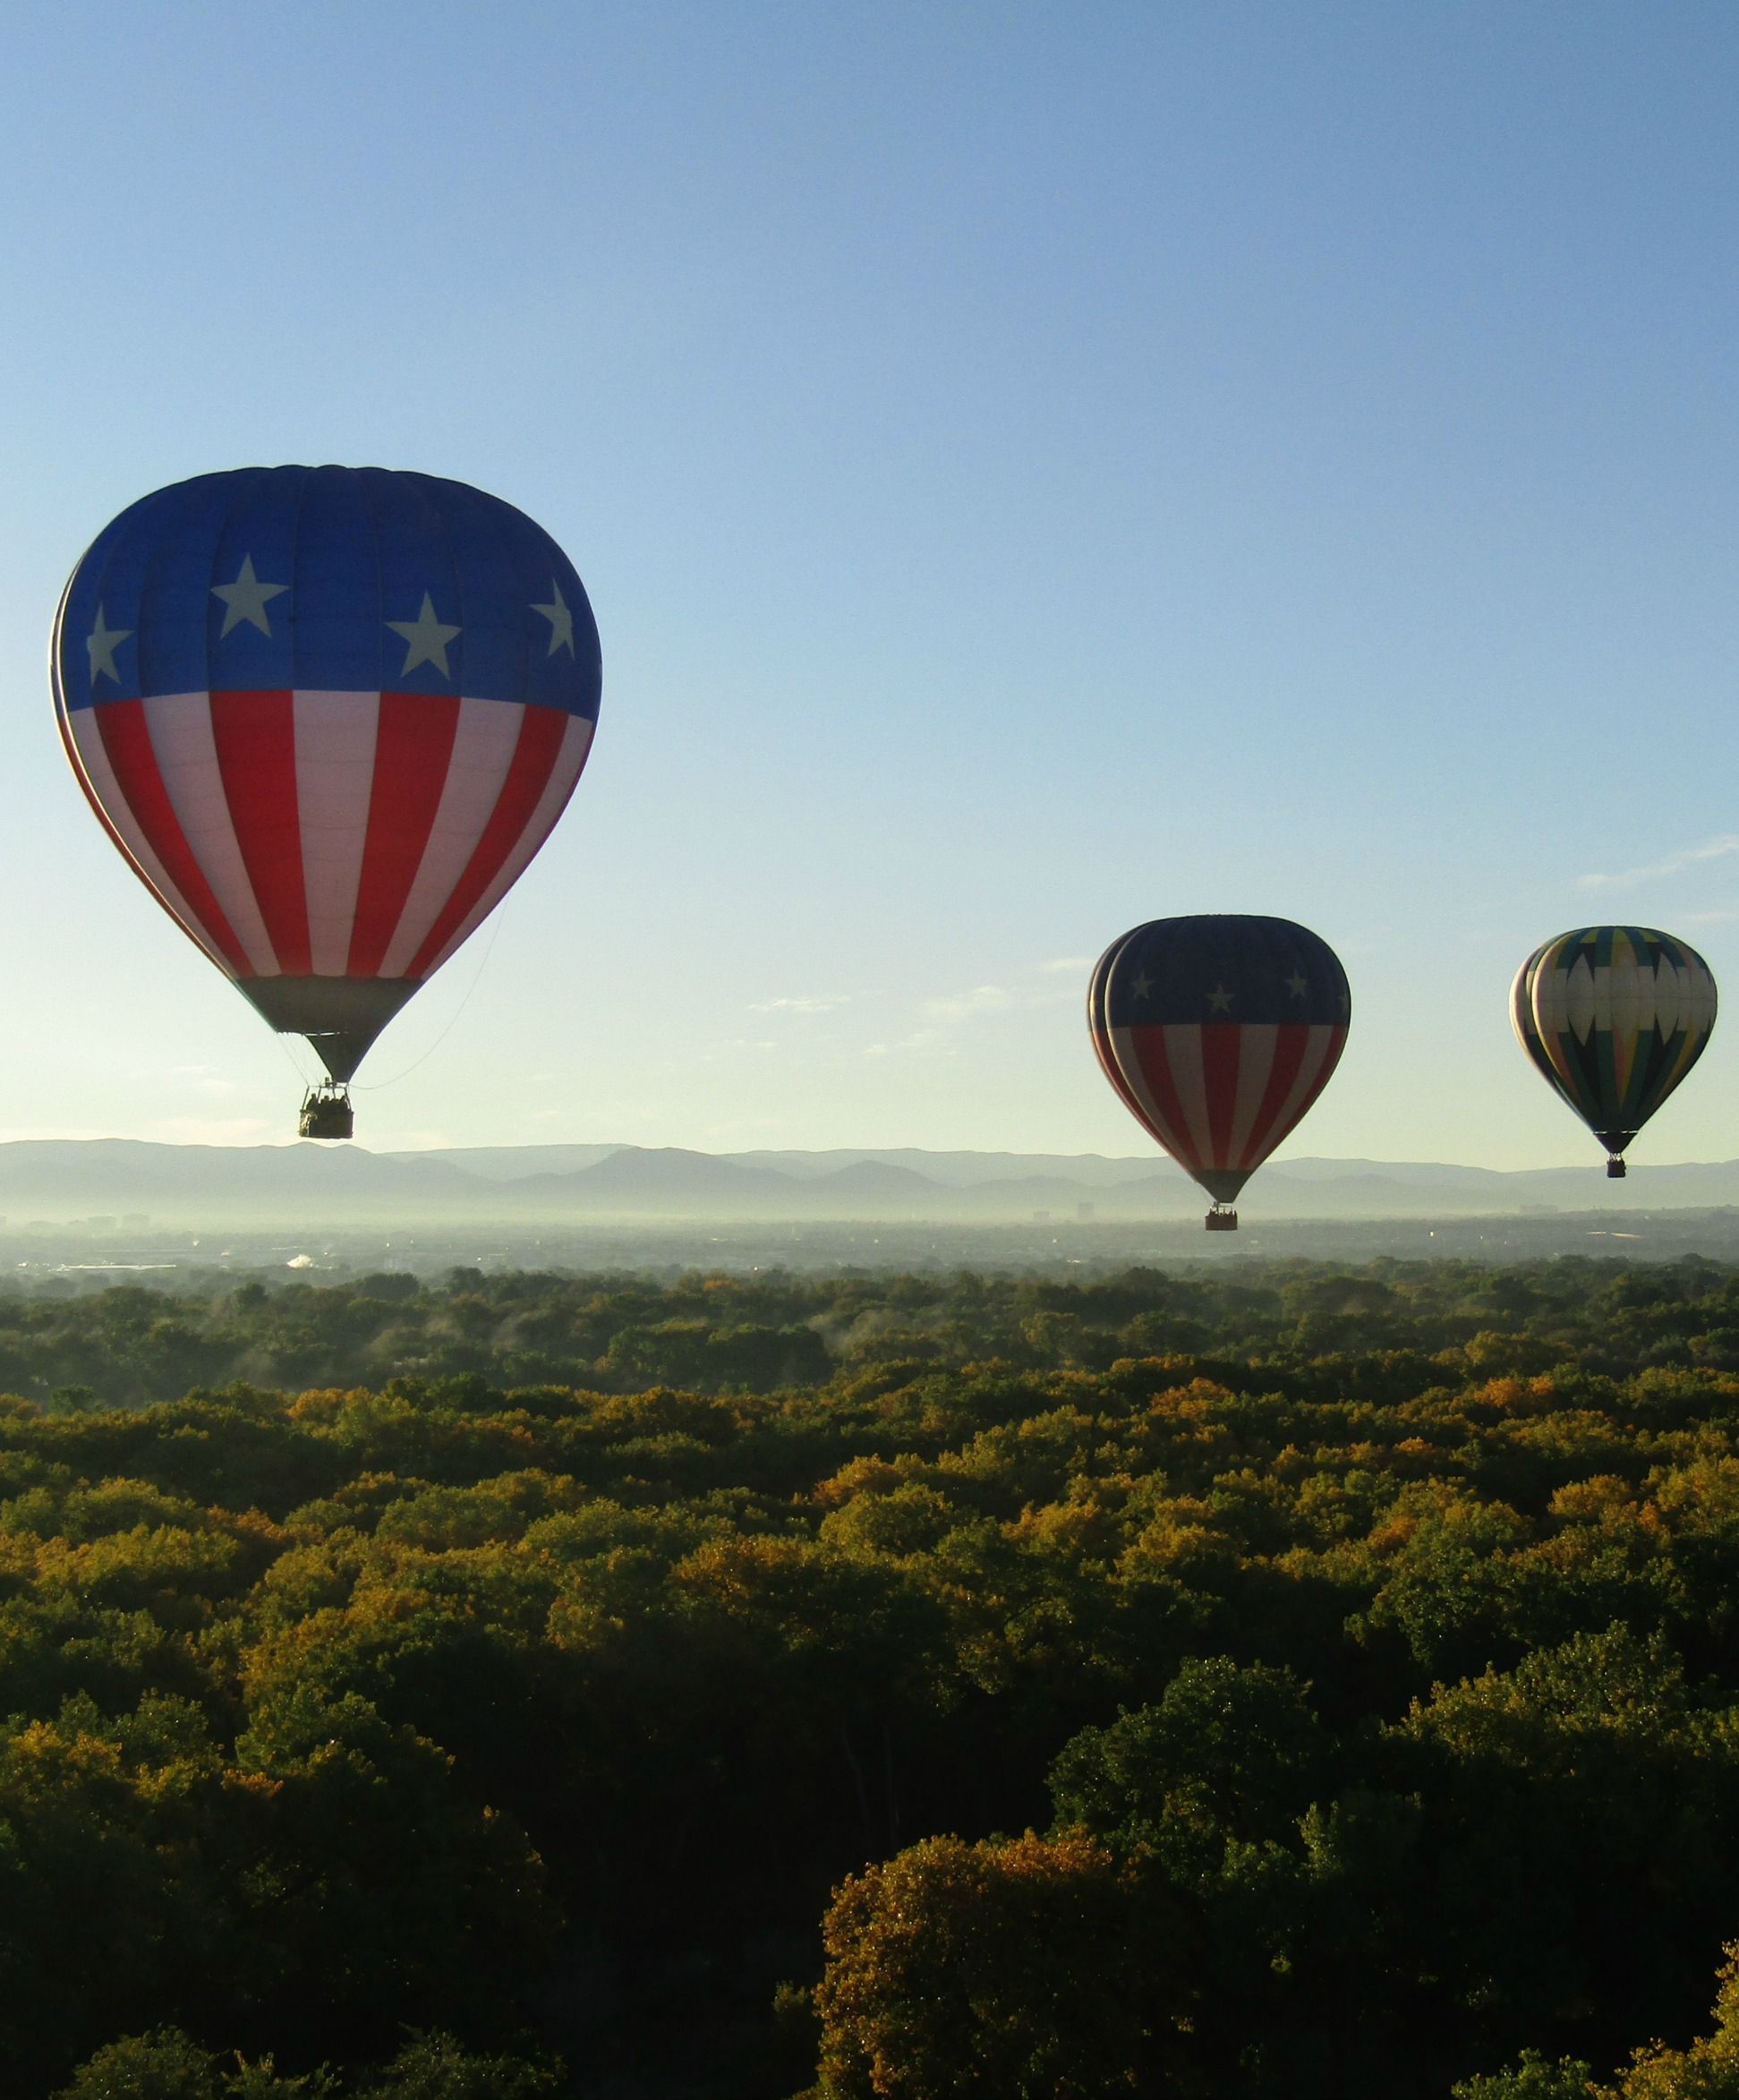 USA Albuquerque, NM (Balloon Fiesta) Travel Agent Diary